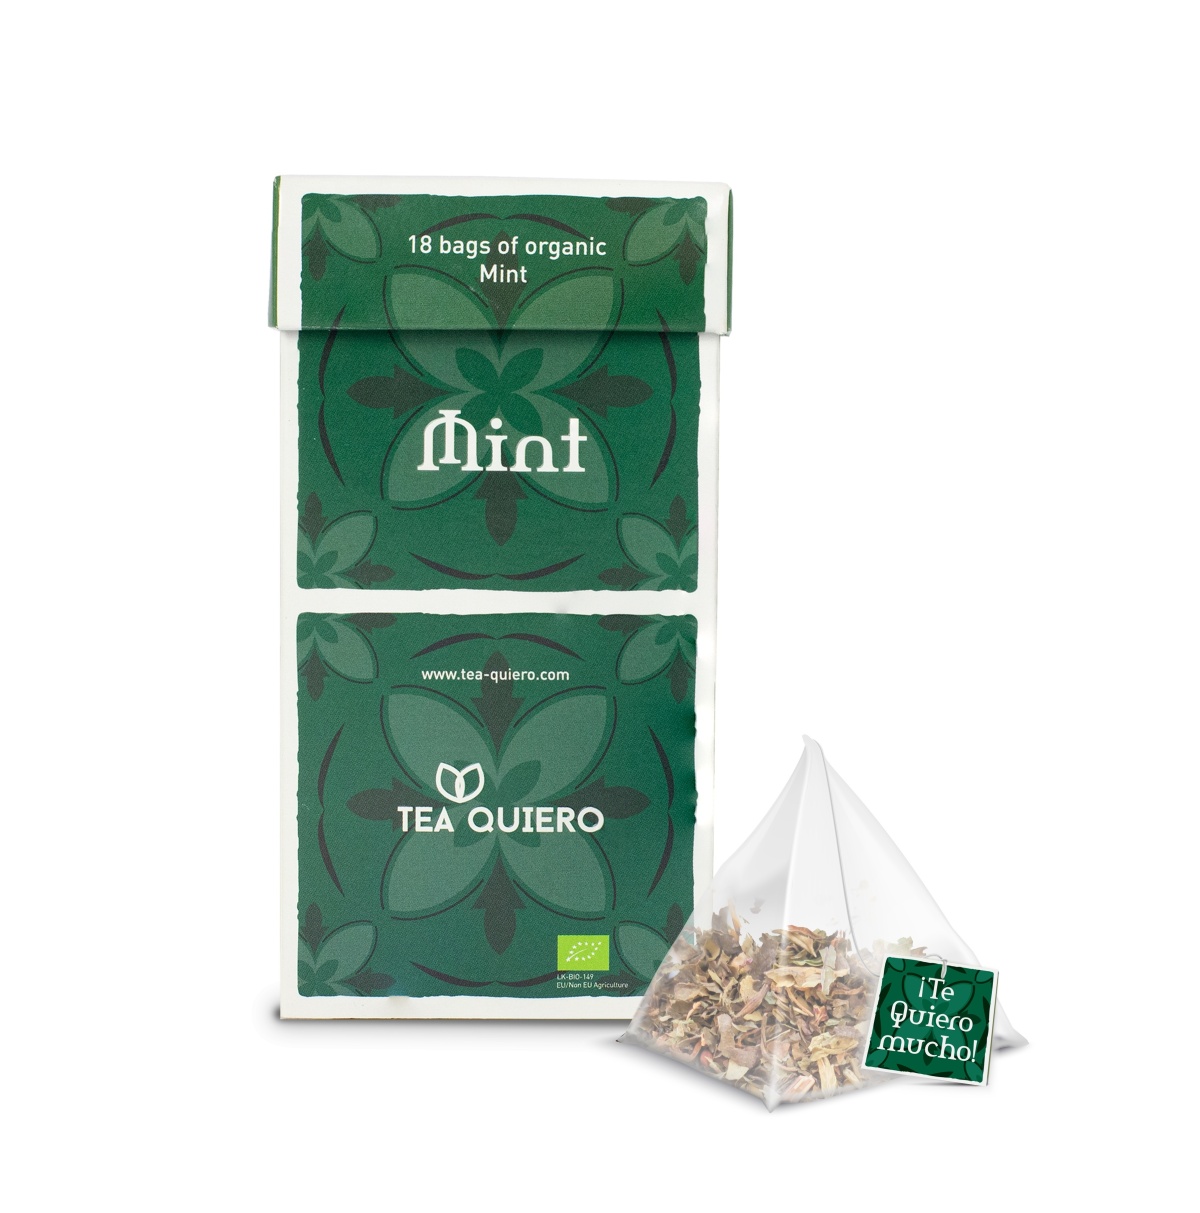 Mint Pure Tea Pyramids - Tea Quiero